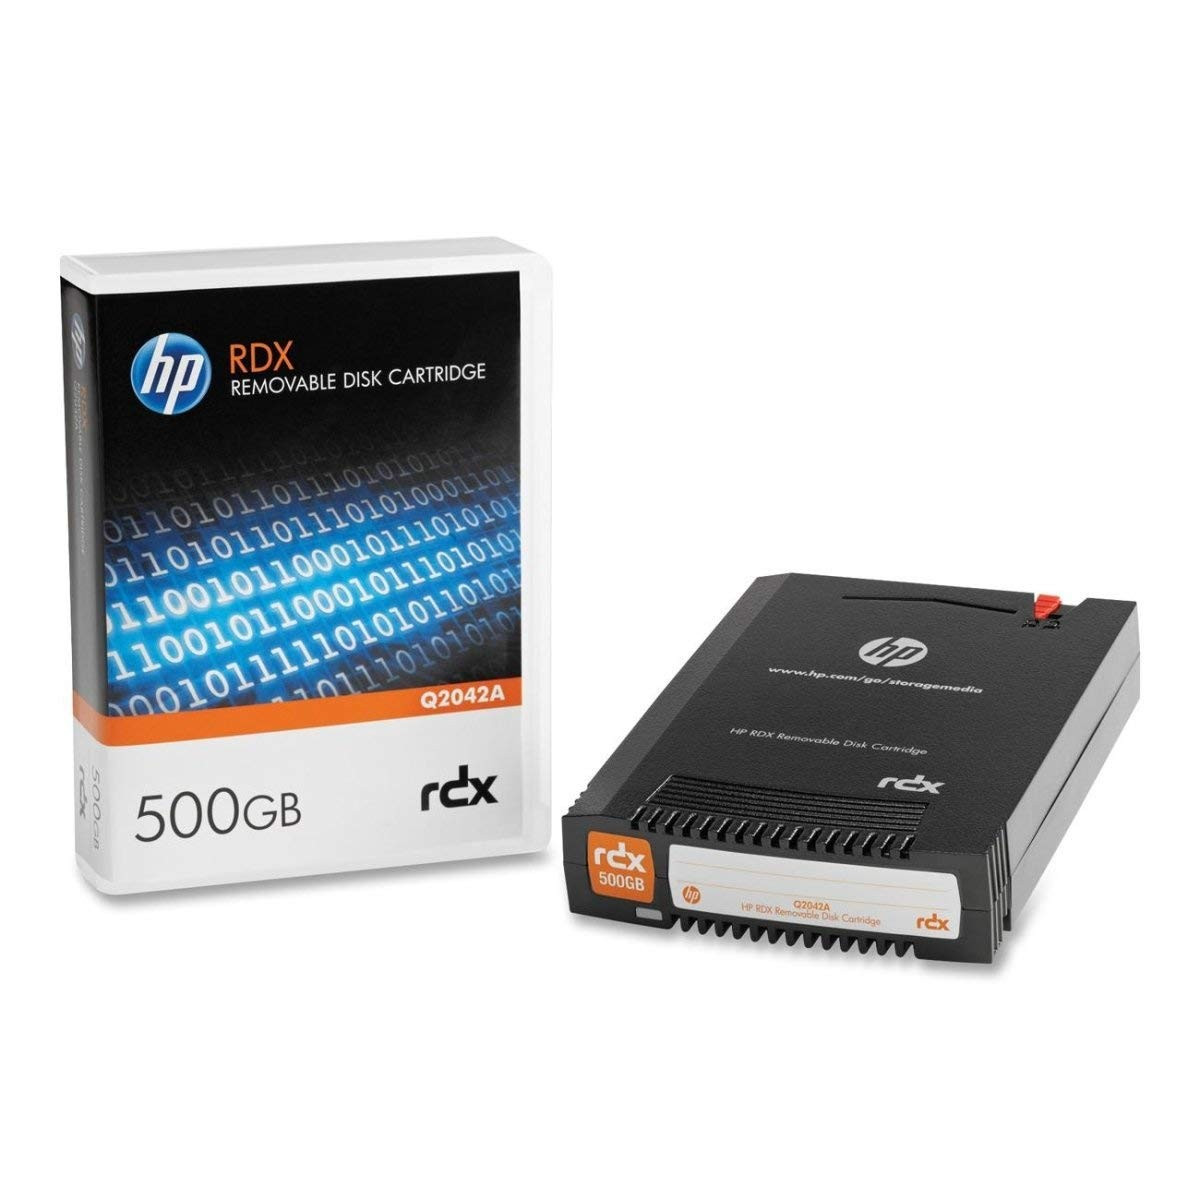 HP 500GB RDX Removable Disk Cartridge (Eredeti)